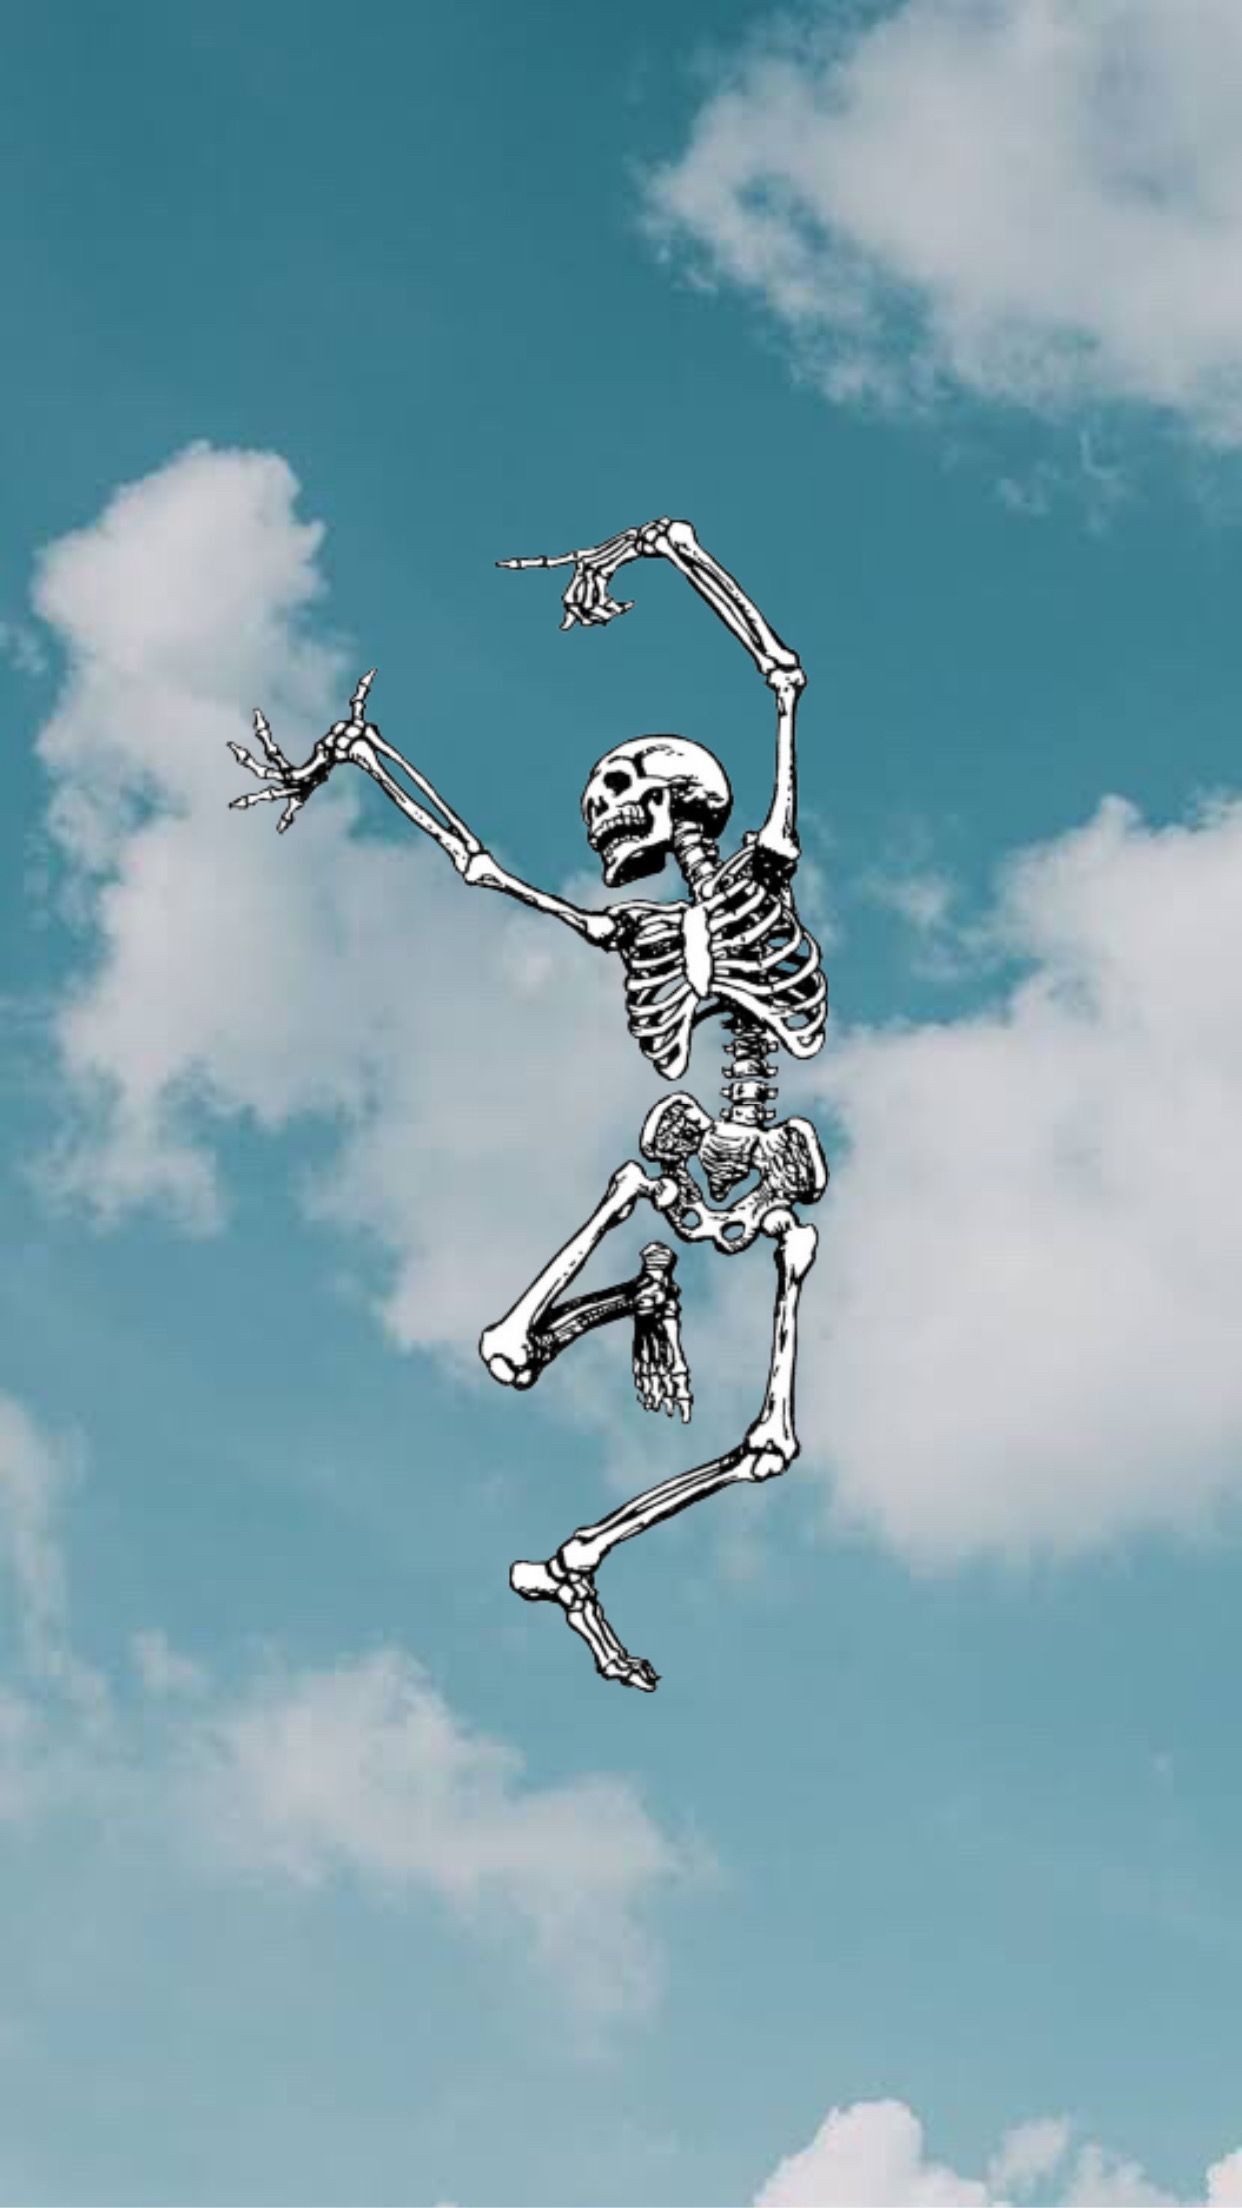 Dancing Skeleton wallpaper background. Art wallpaper iphone, Dark wallpaper iphone, Witchy wallpaper